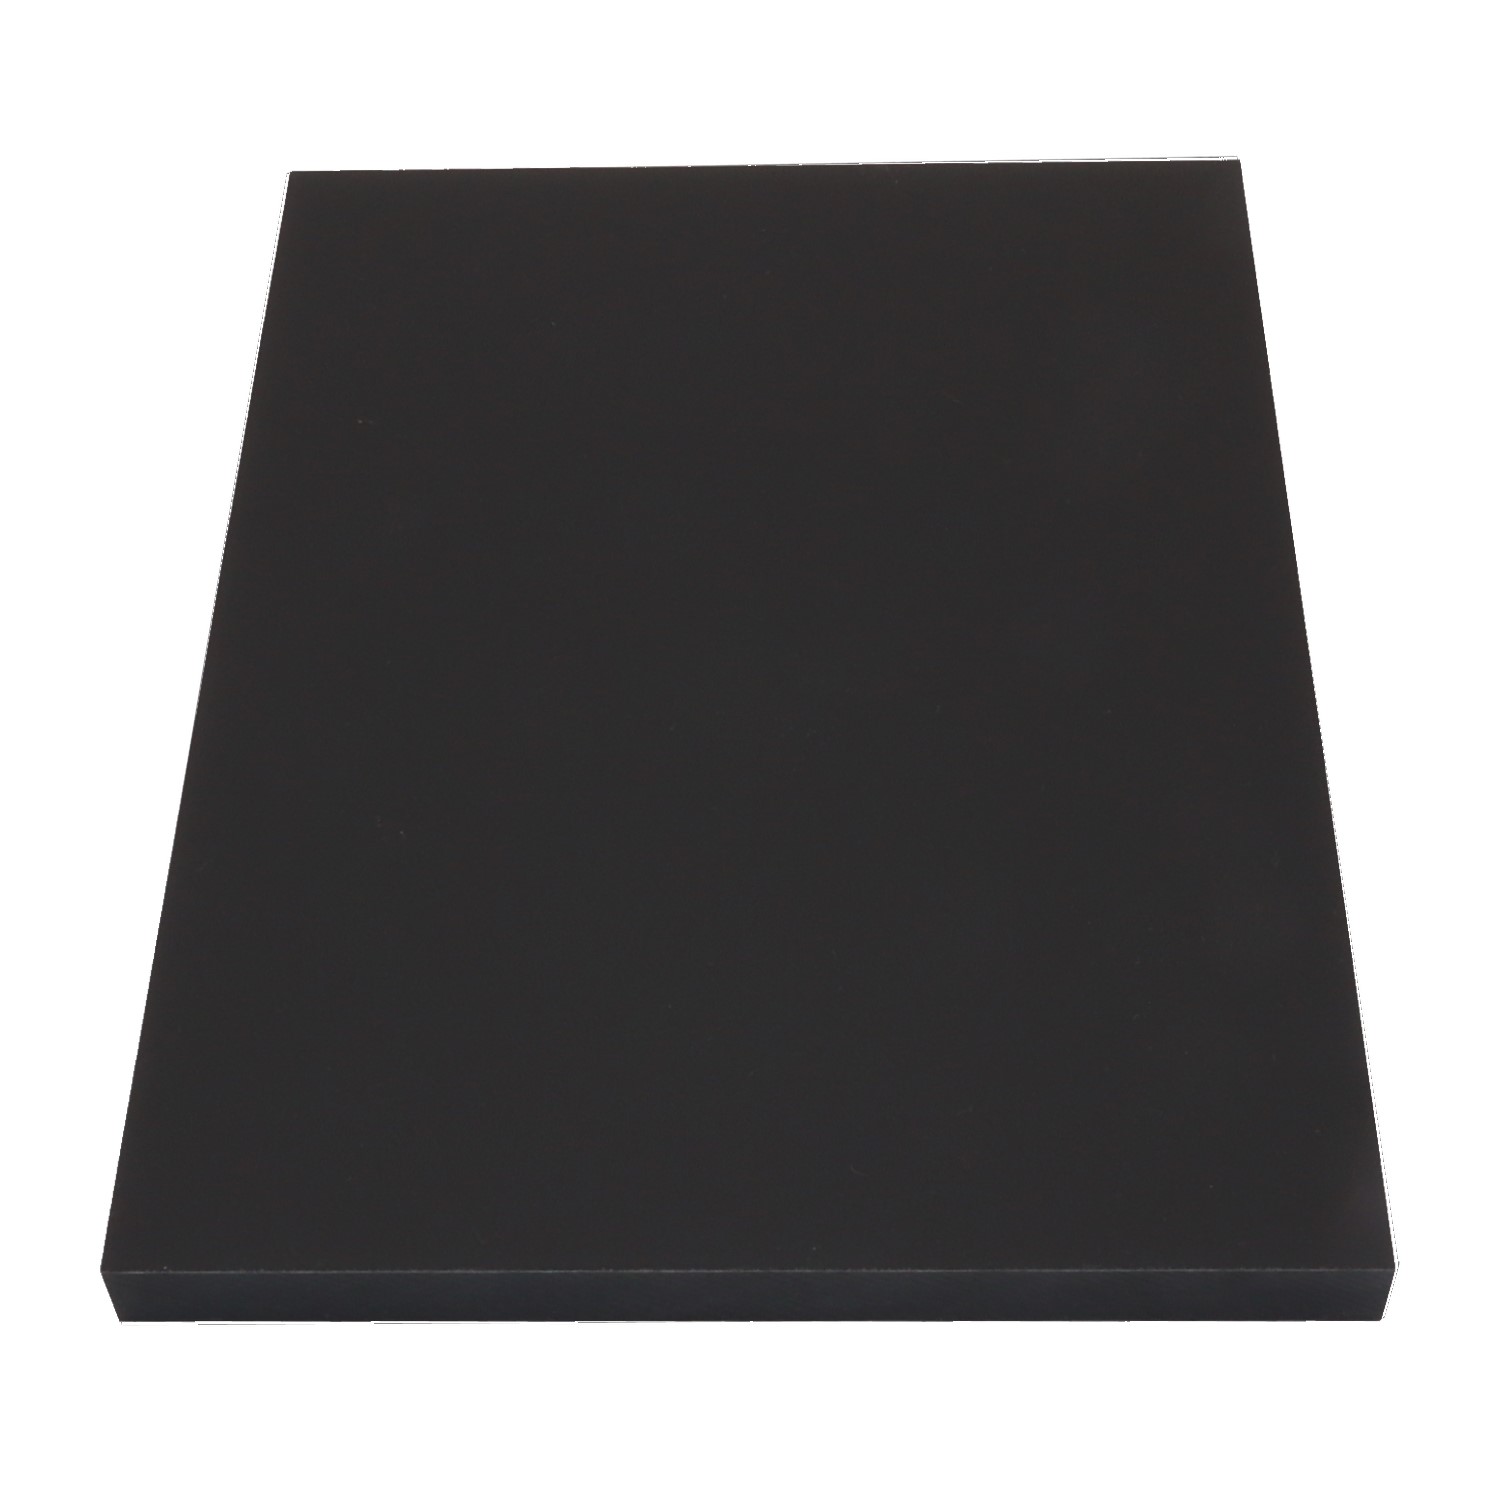 Sample Carbon compact black 8101 6" x 8"